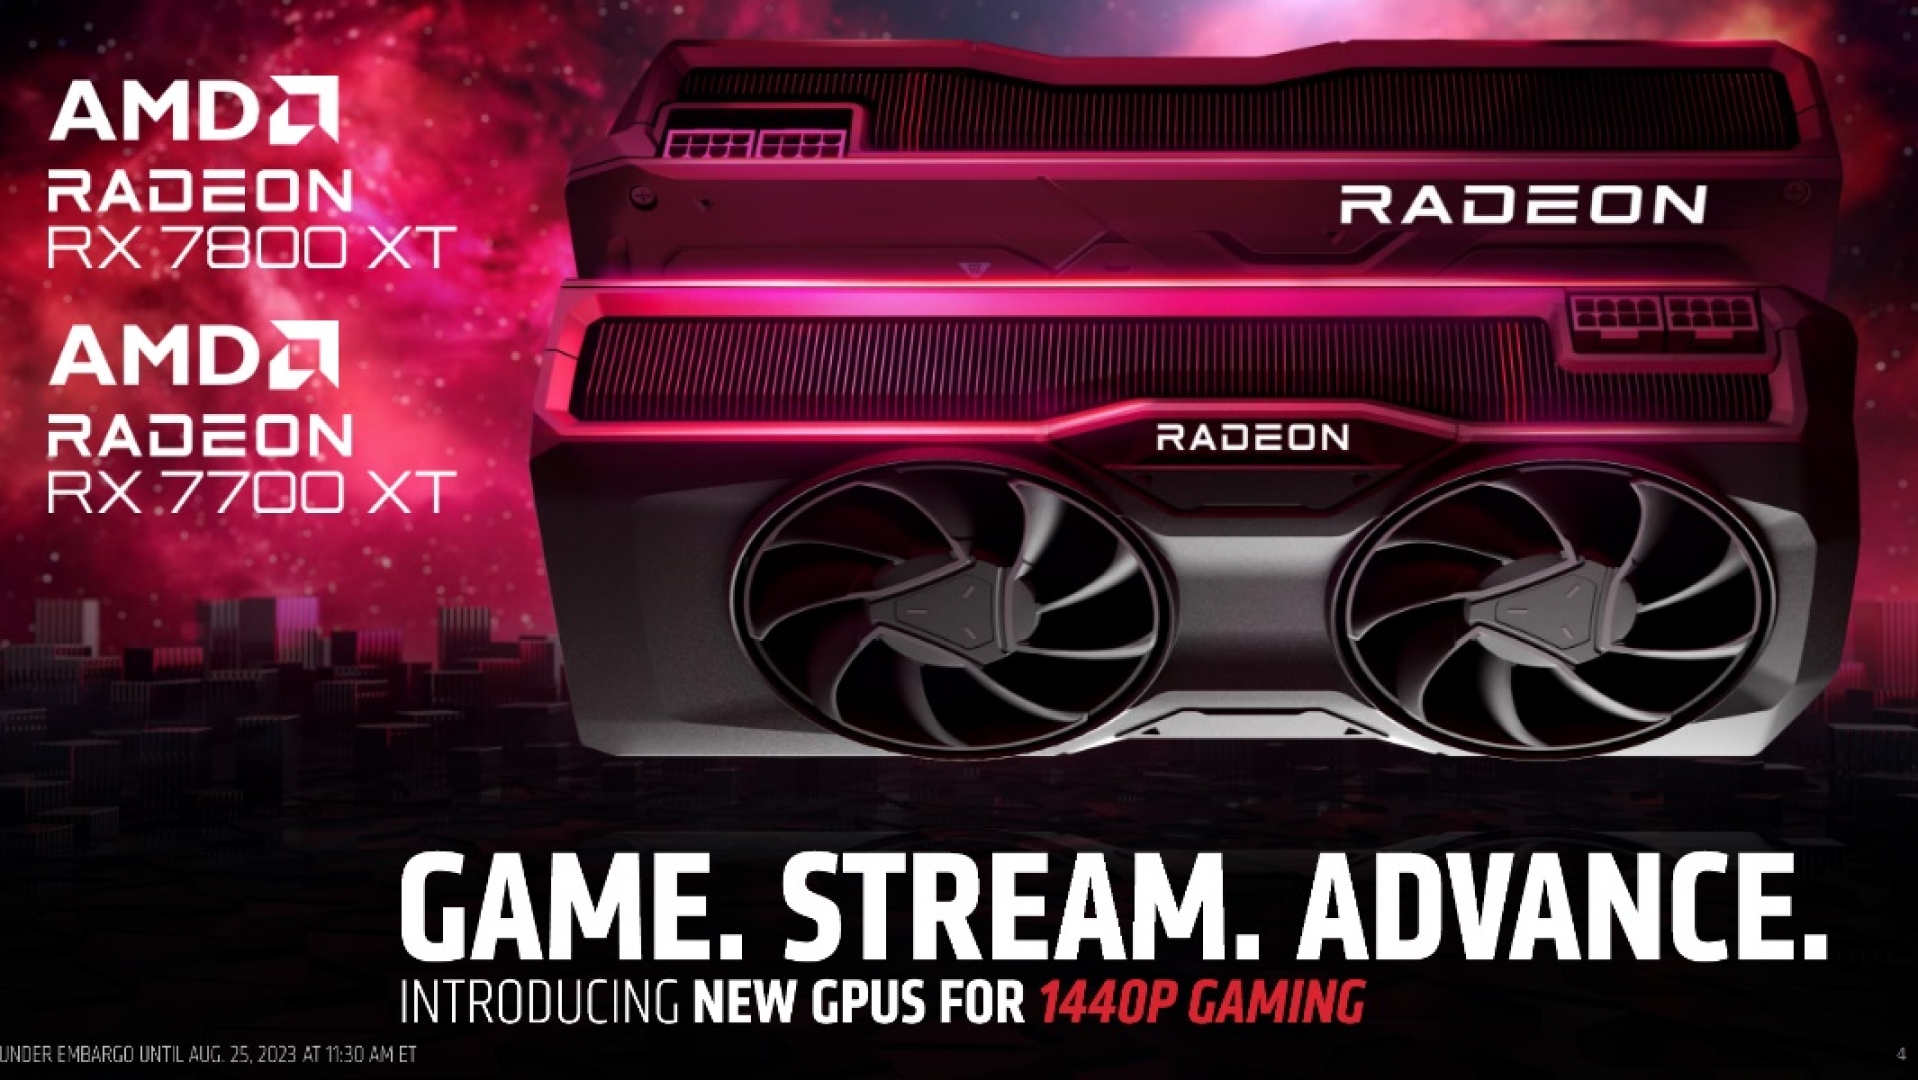 Gaming 1440p on Radeon RDNA 3